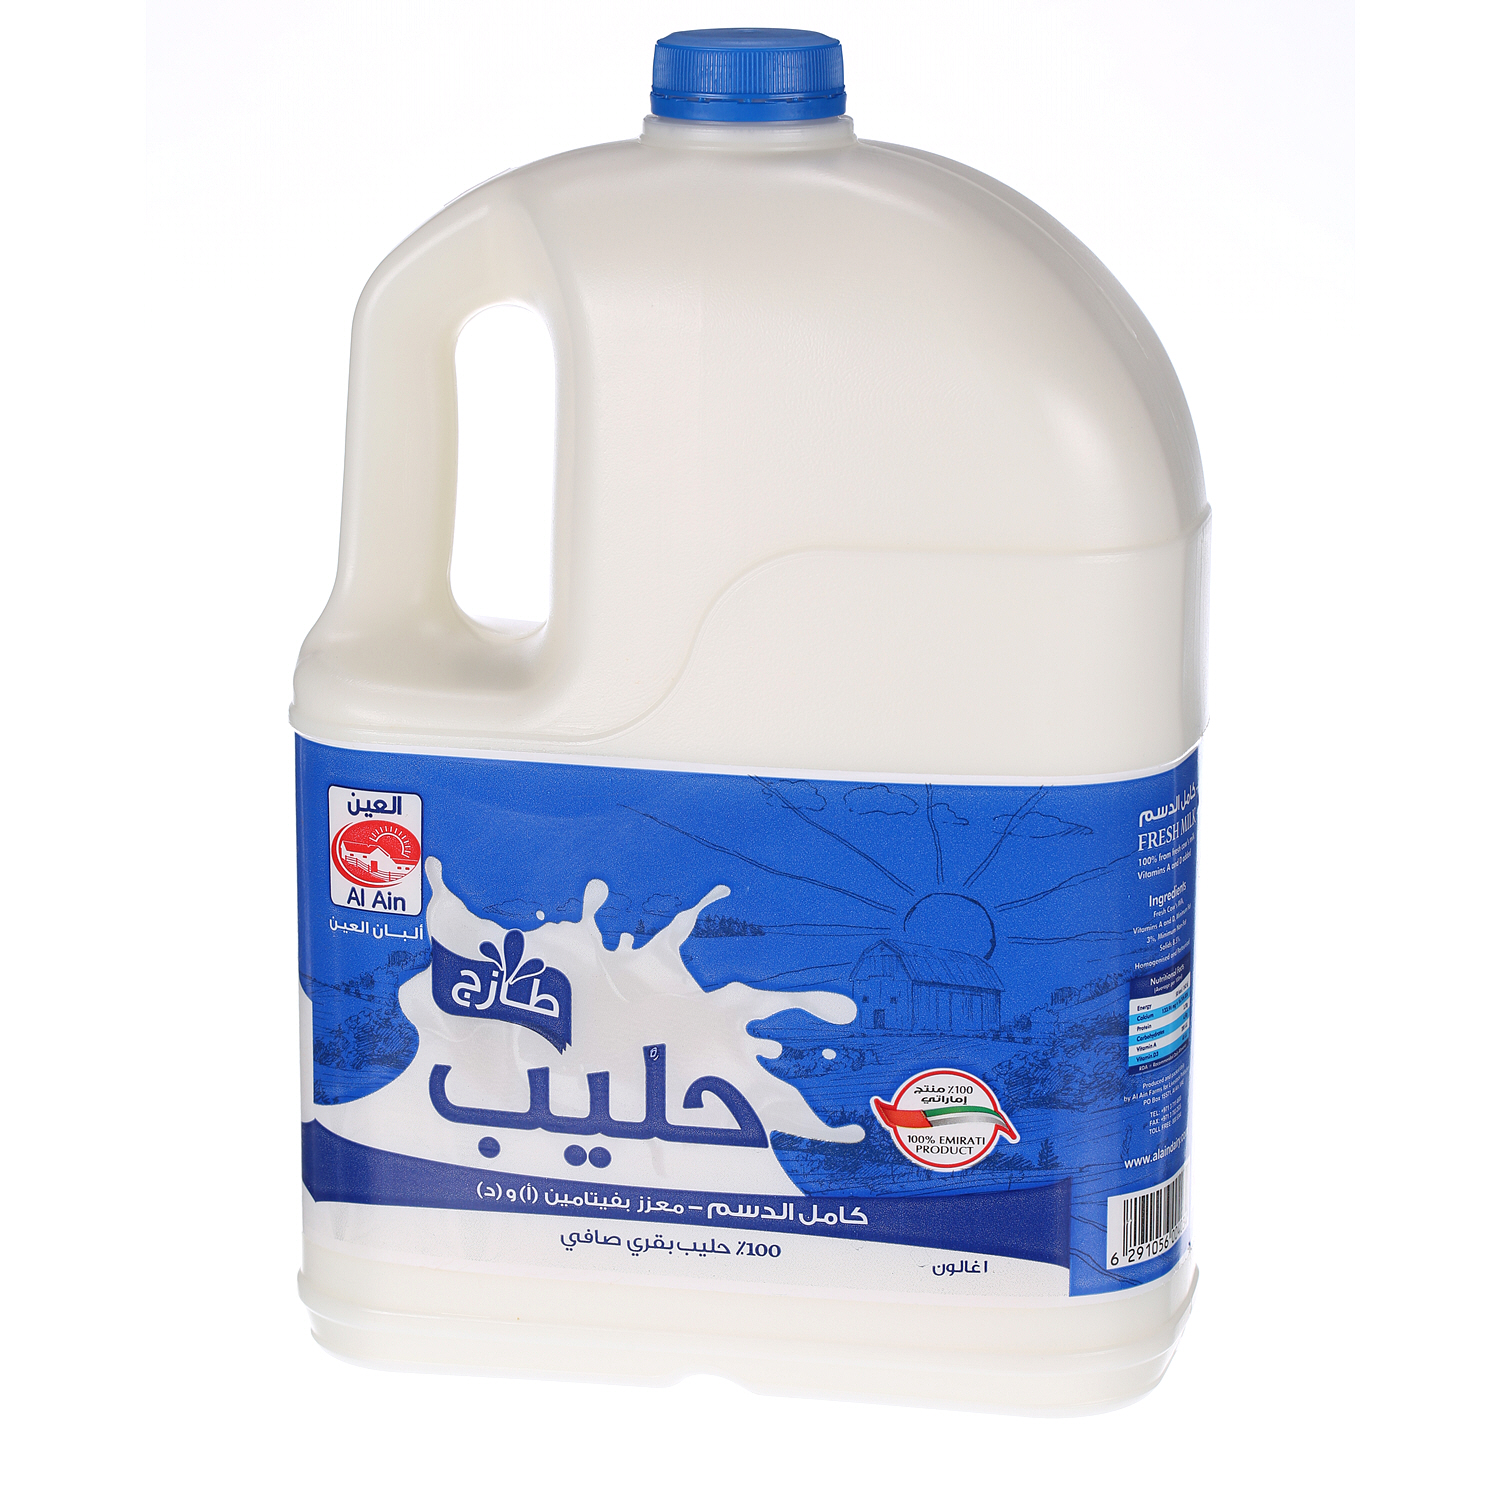 Al Ain Fresh Milk Full Cream 1 Gallon